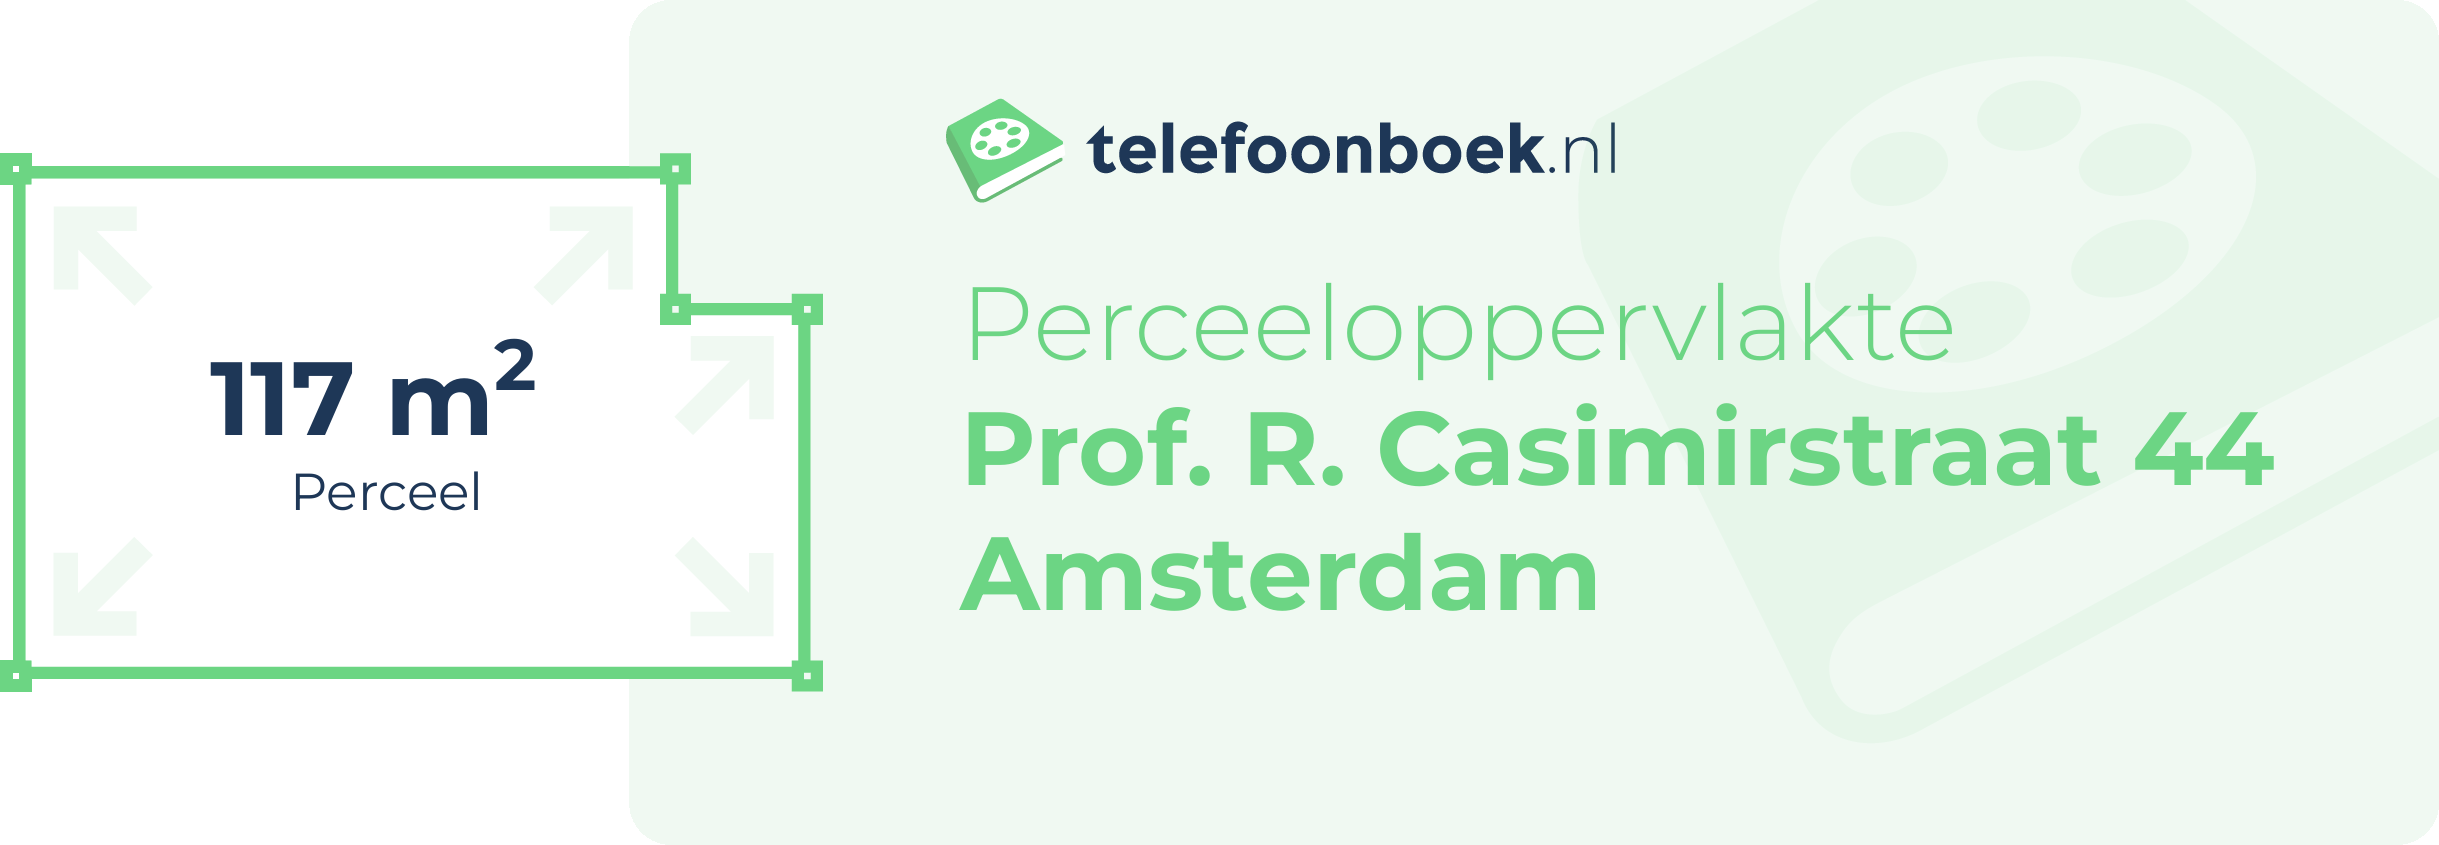 Perceeloppervlakte Prof. R. Casimirstraat 44 Amsterdam